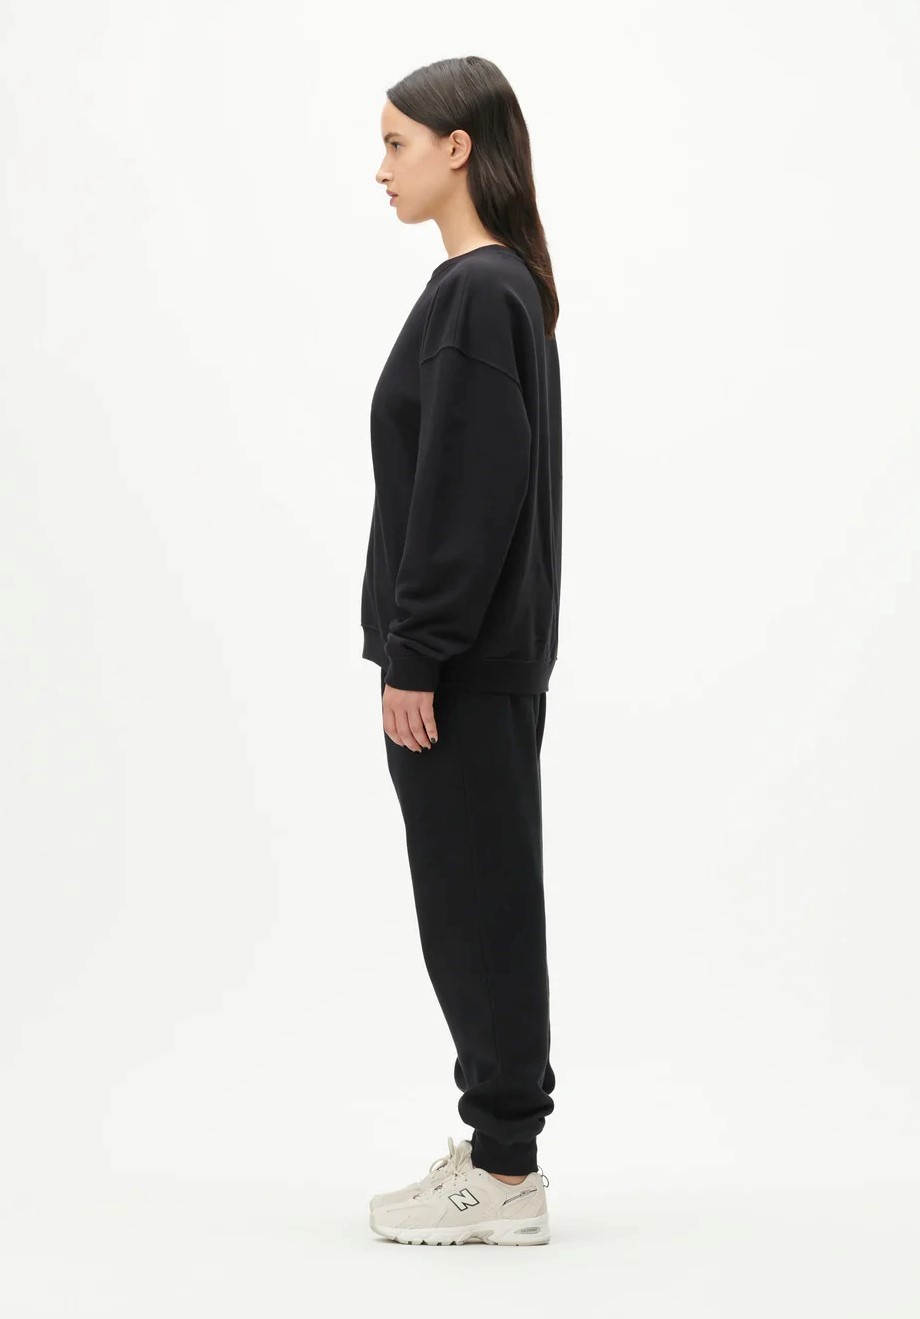 Lala Berlin Sweatshirt Izami in Black S